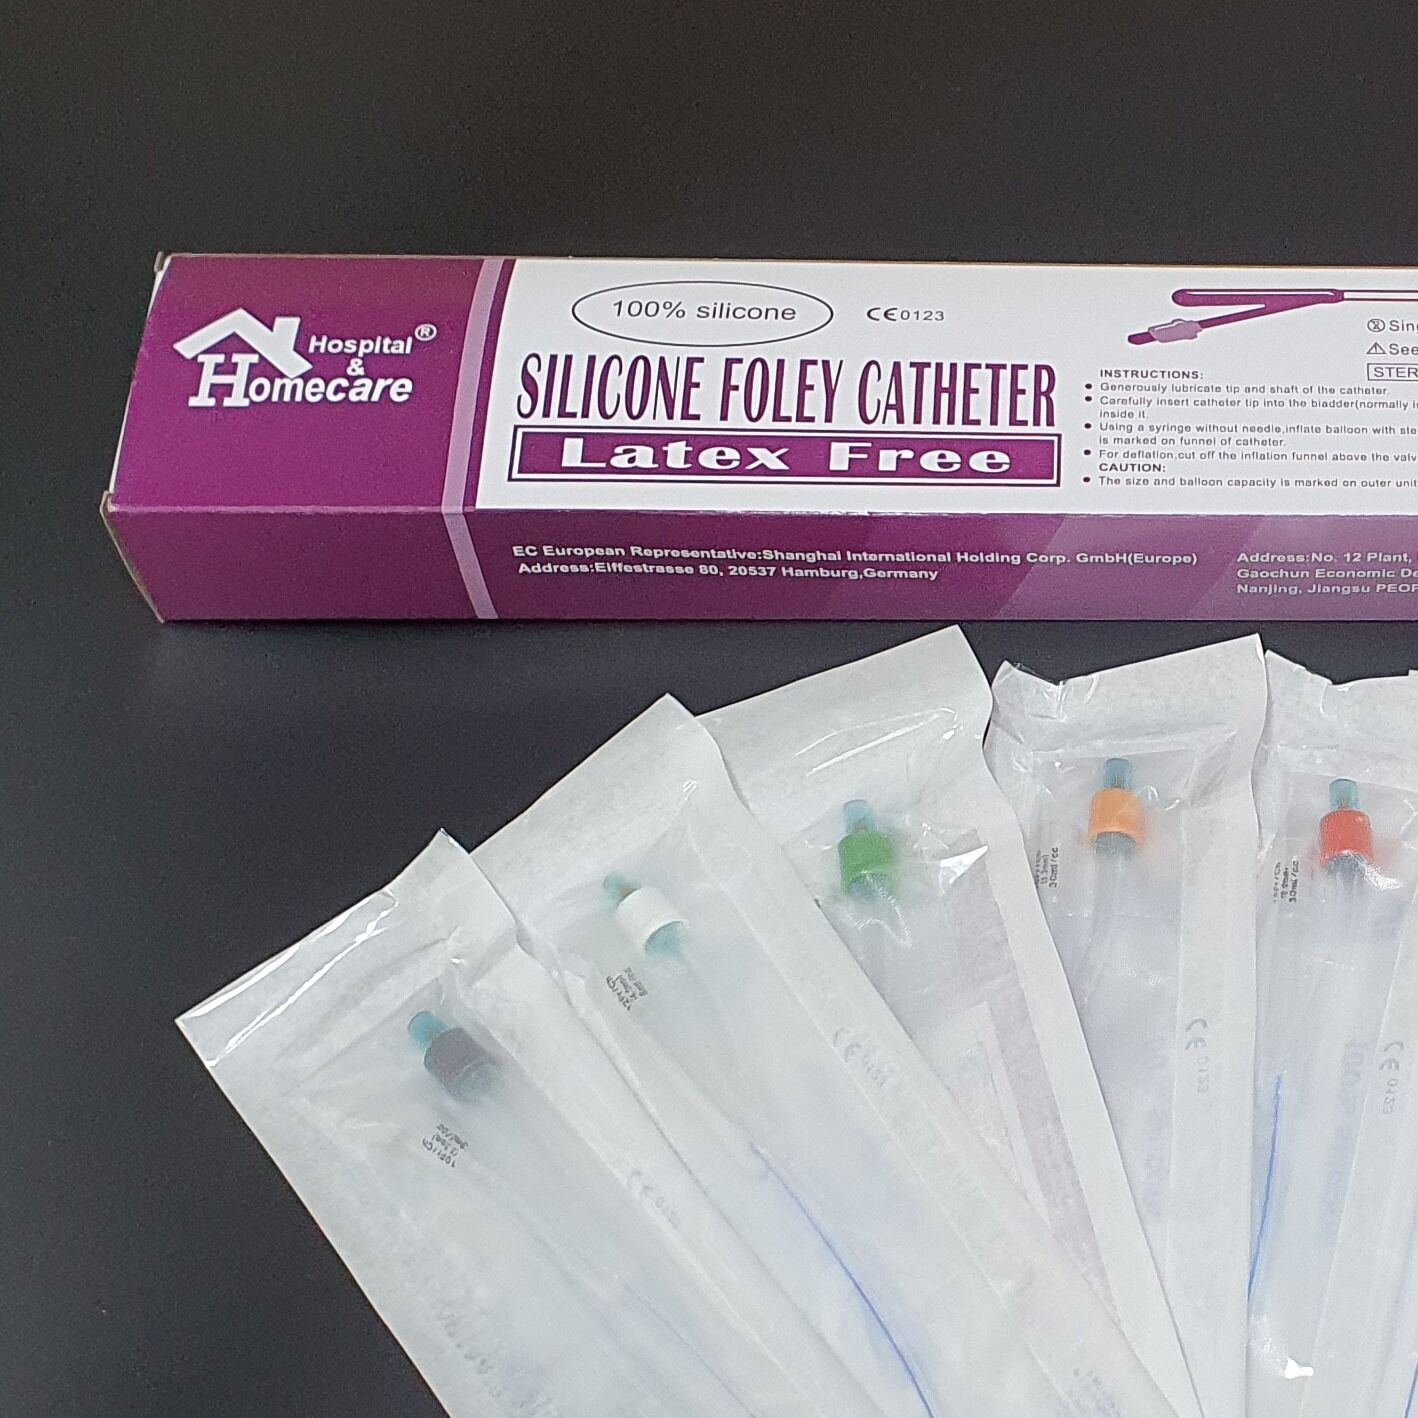 Silicone Foley Catheter 2 waysสายสวนปัสสาวะซิลิโคน 2 ทาง